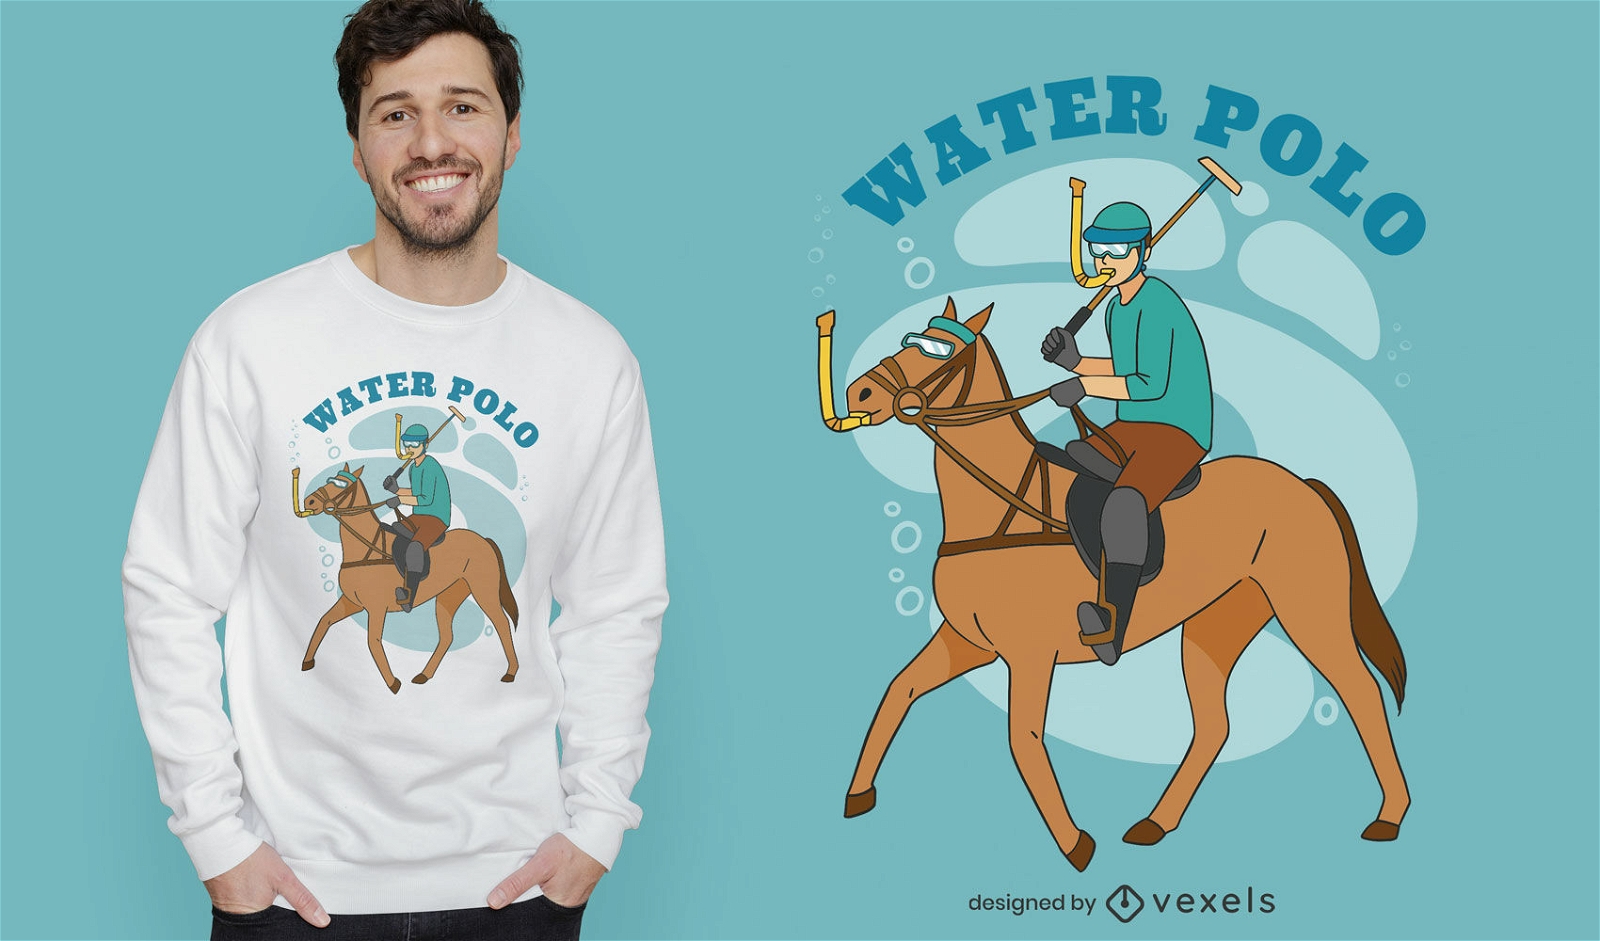 Wasserball Wasserpolo Wasser Polo Sport Geschenk' Frauen T-Shirt